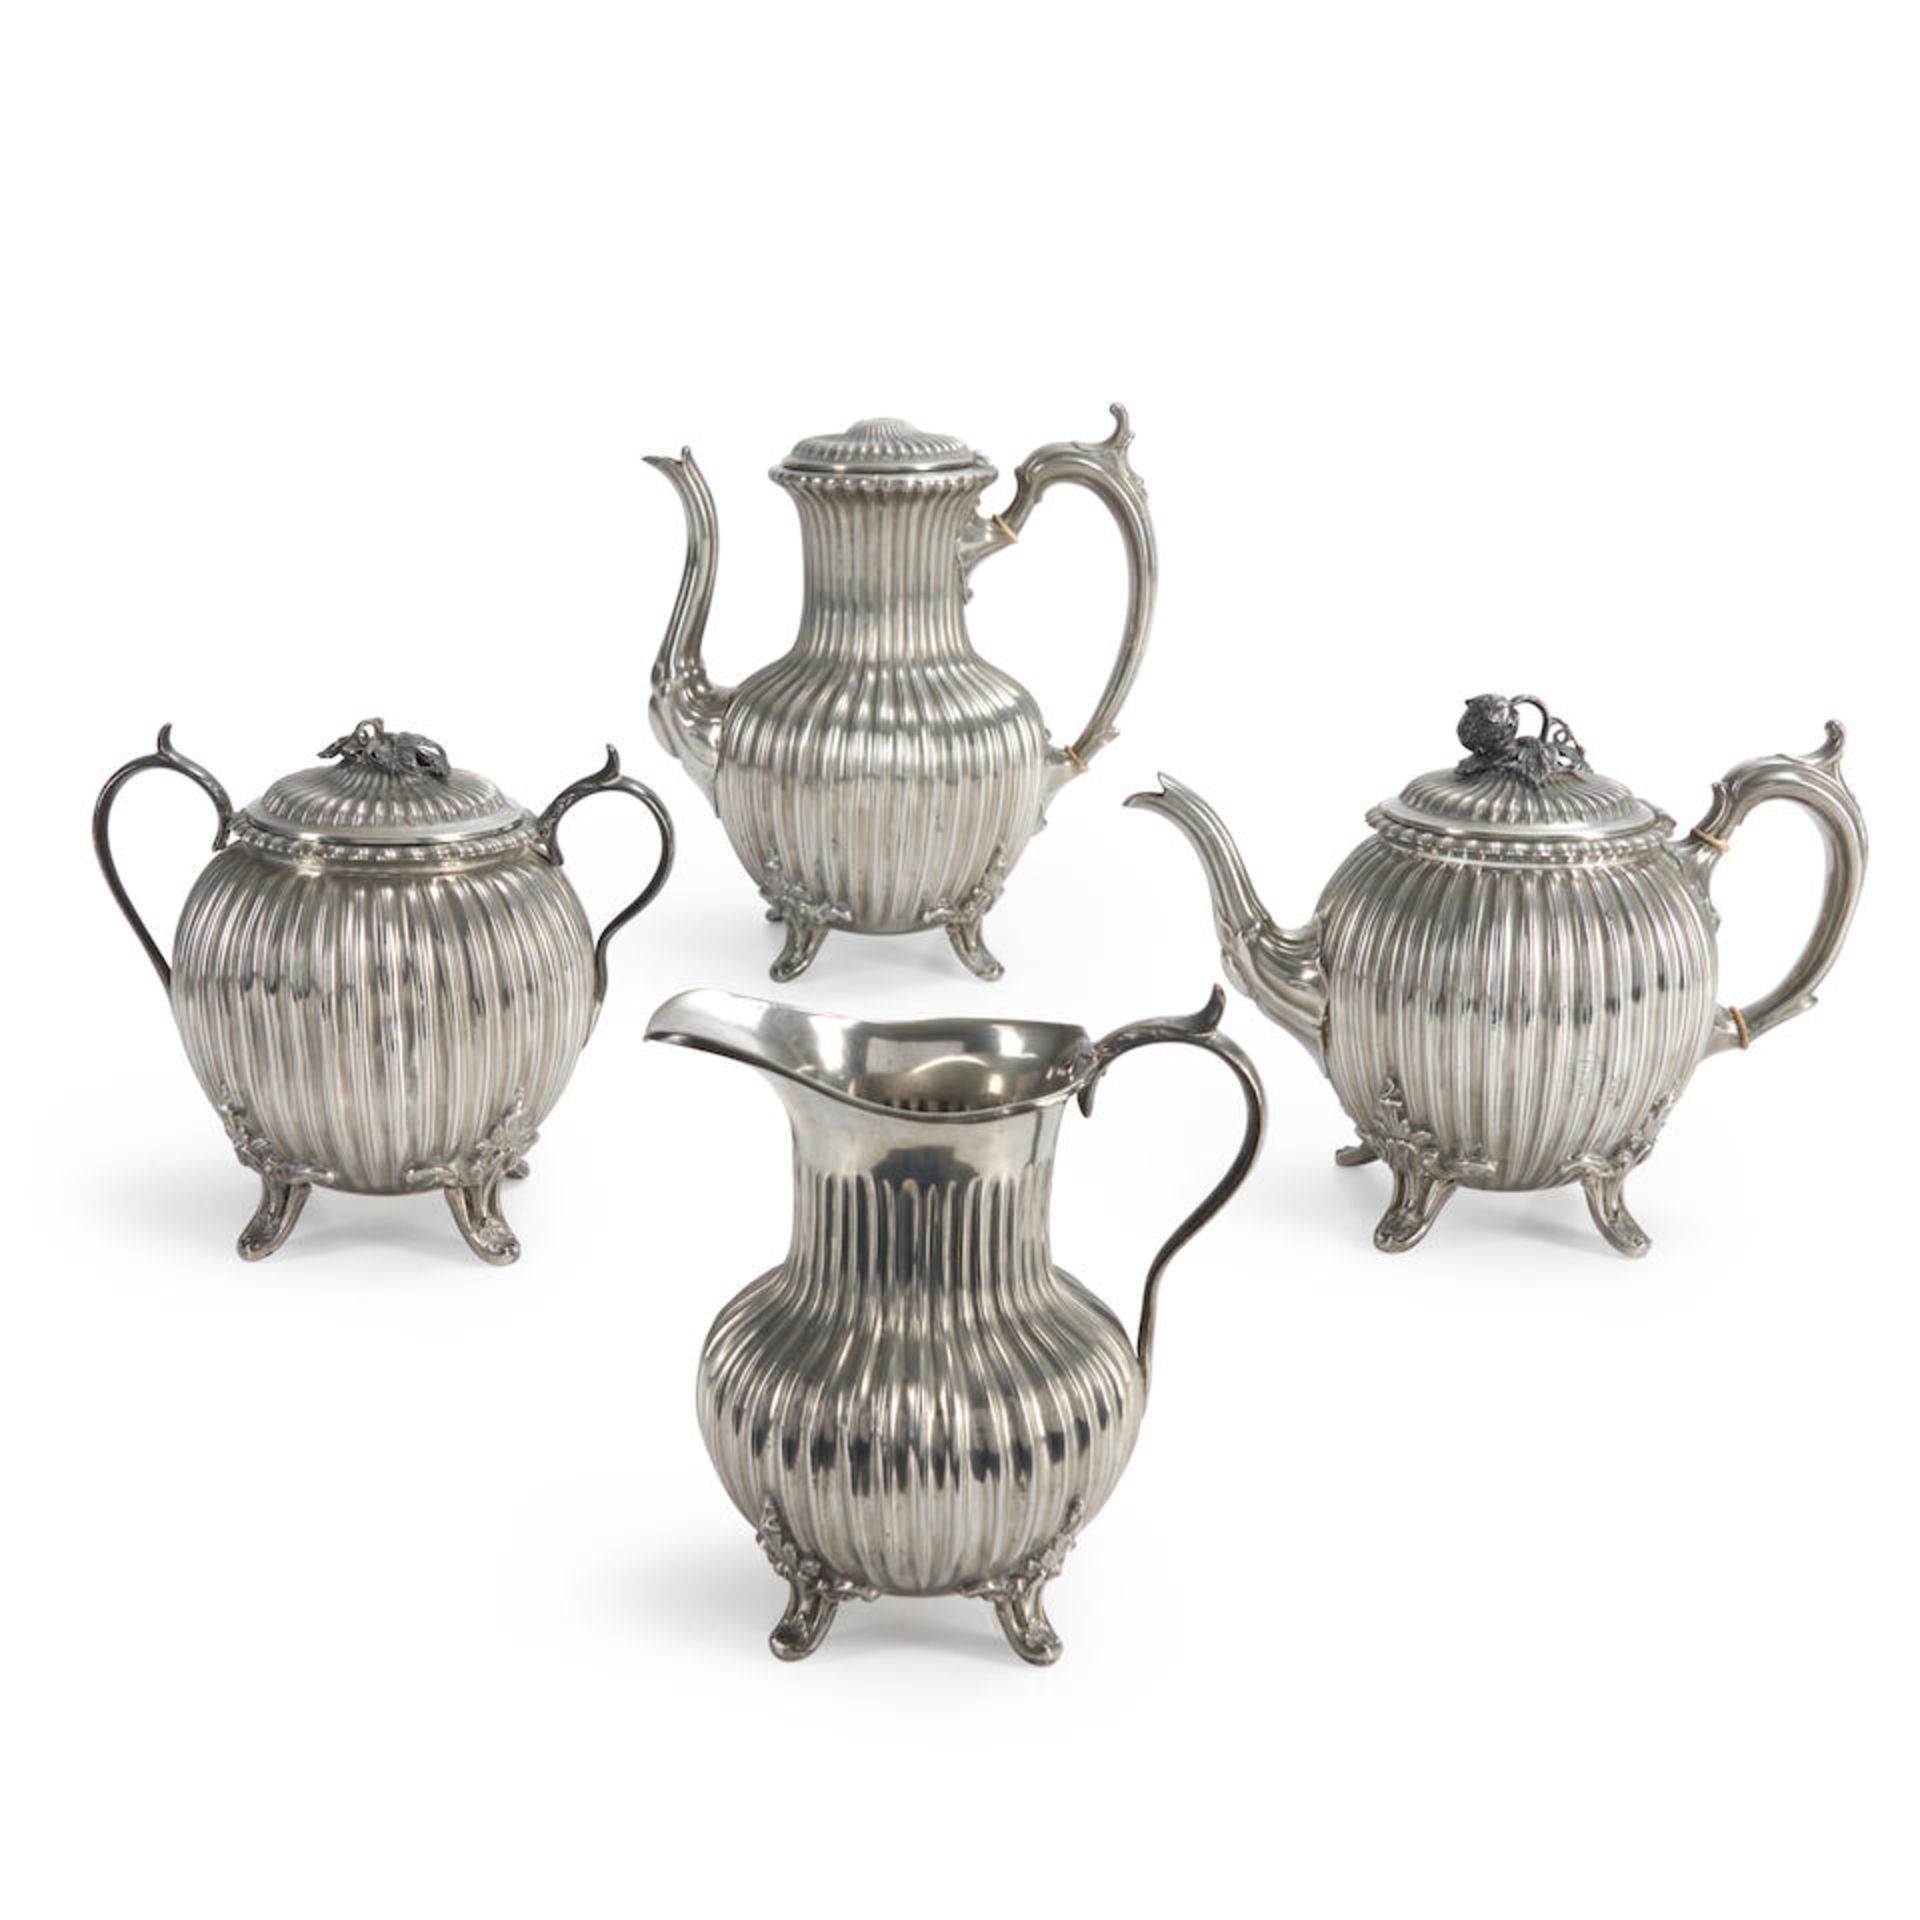 Four Britannia Tea Service Items, Shaw & Fisher (1830-94), Sheffield, England, c. 1890.